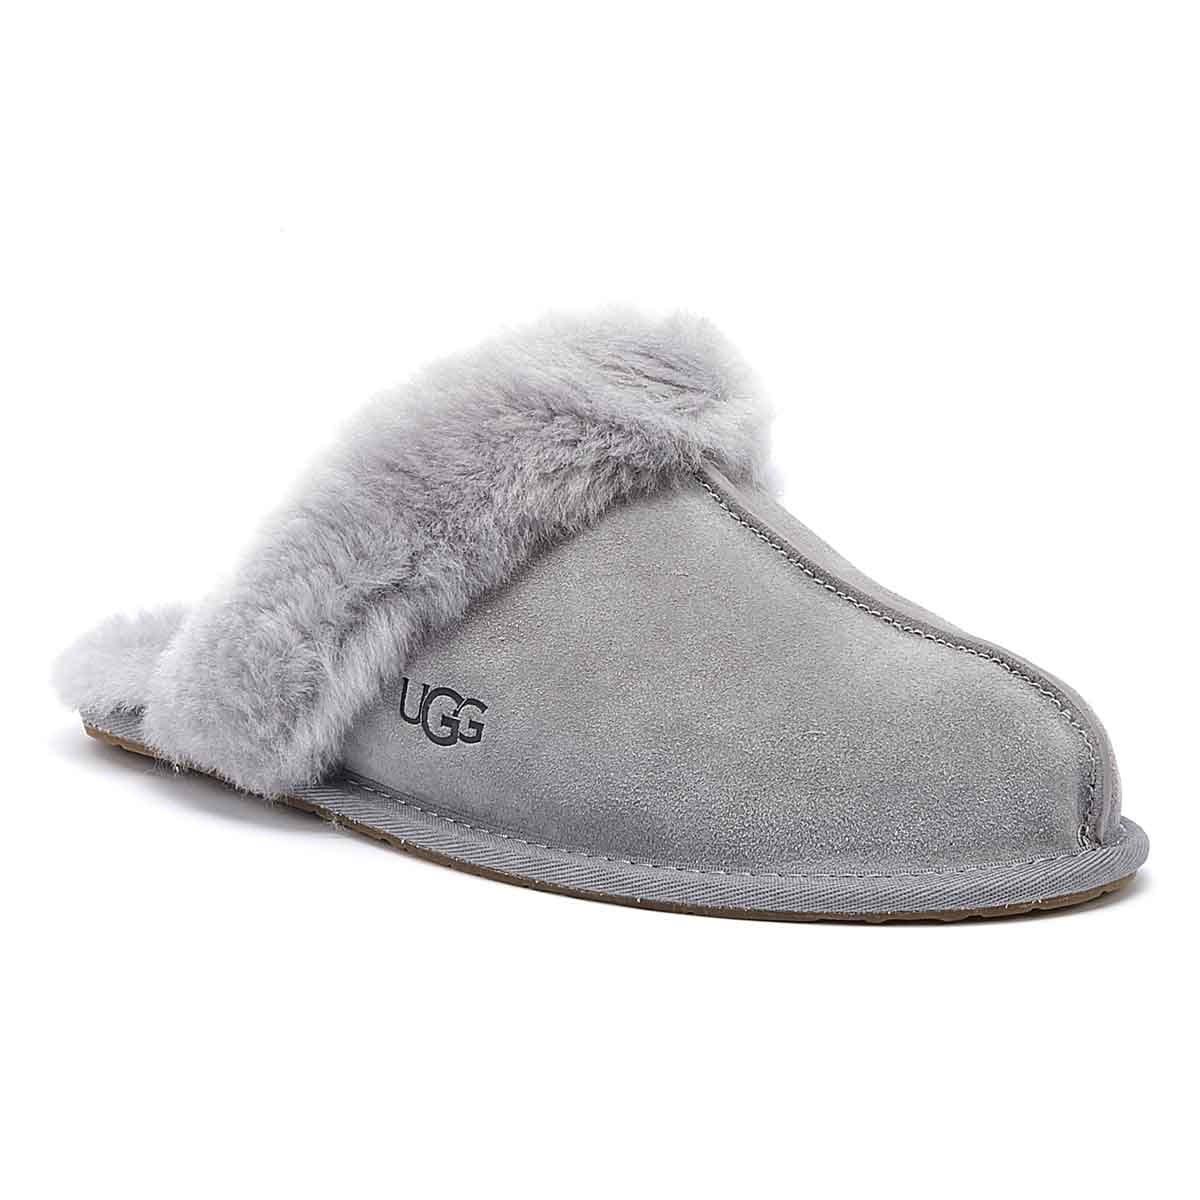 ugg scuffette slippers grey